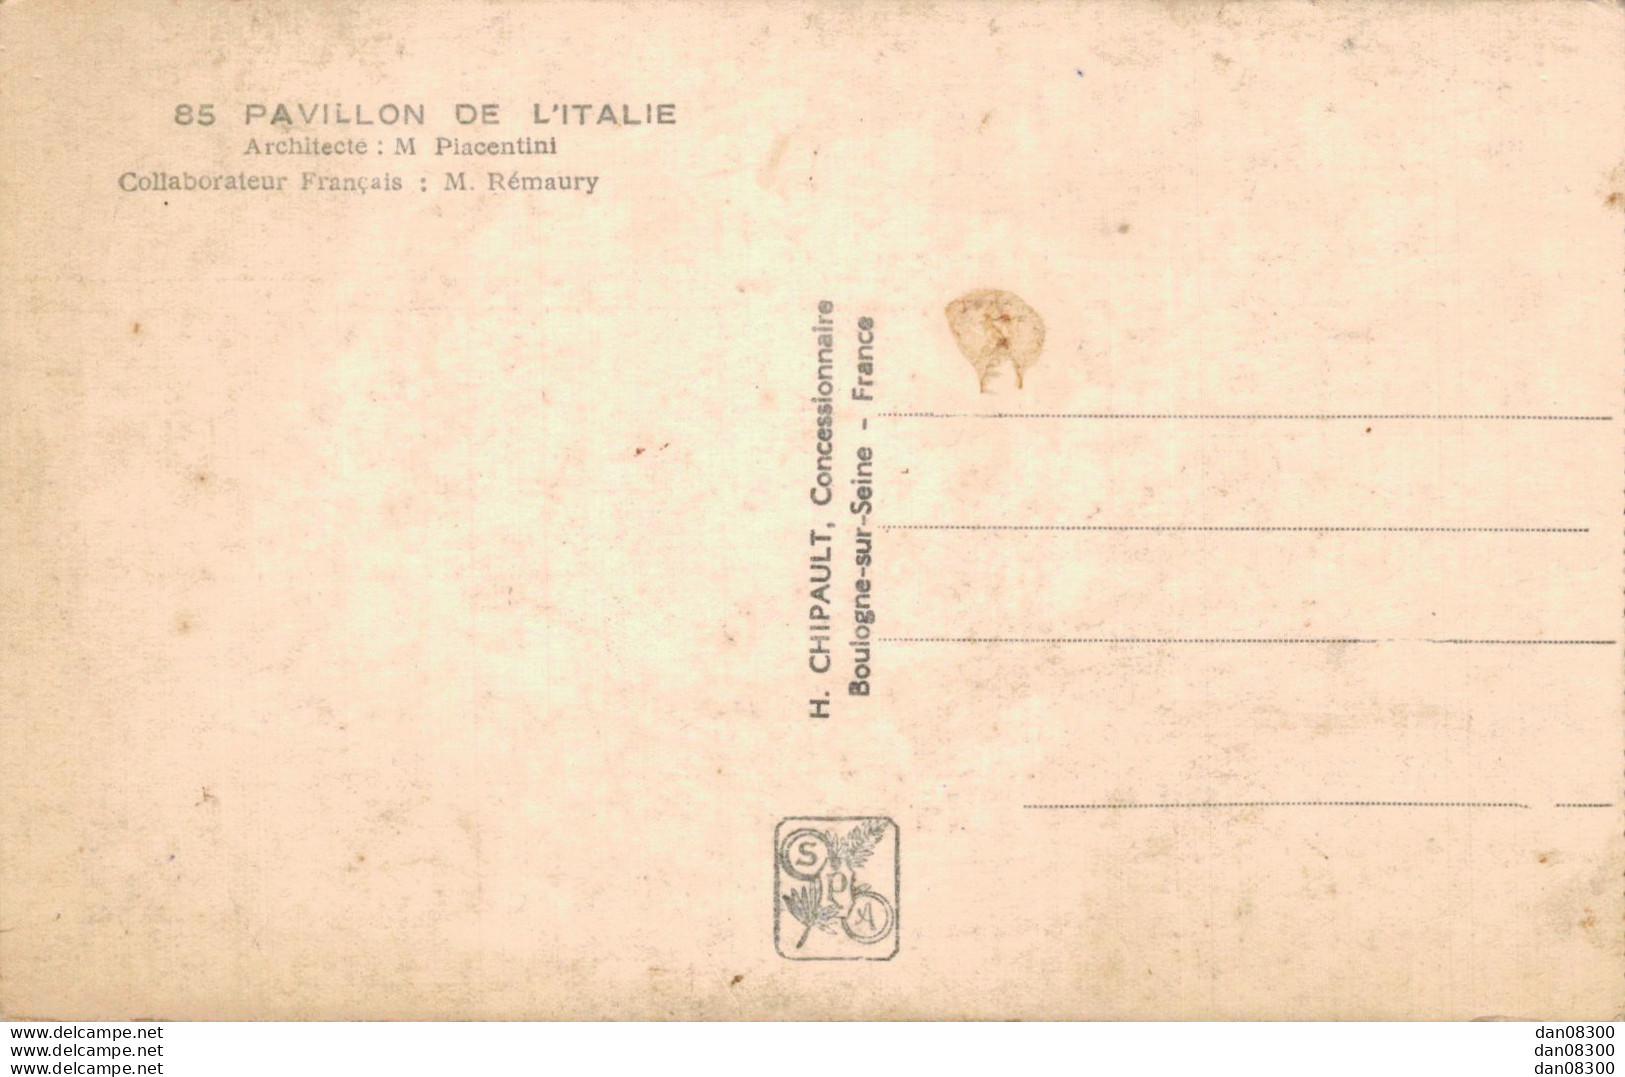 75 EXPOSITION INTERNATIONALE PARIS 1937 PAVILLON DE L'ITALIE - Exposiciones